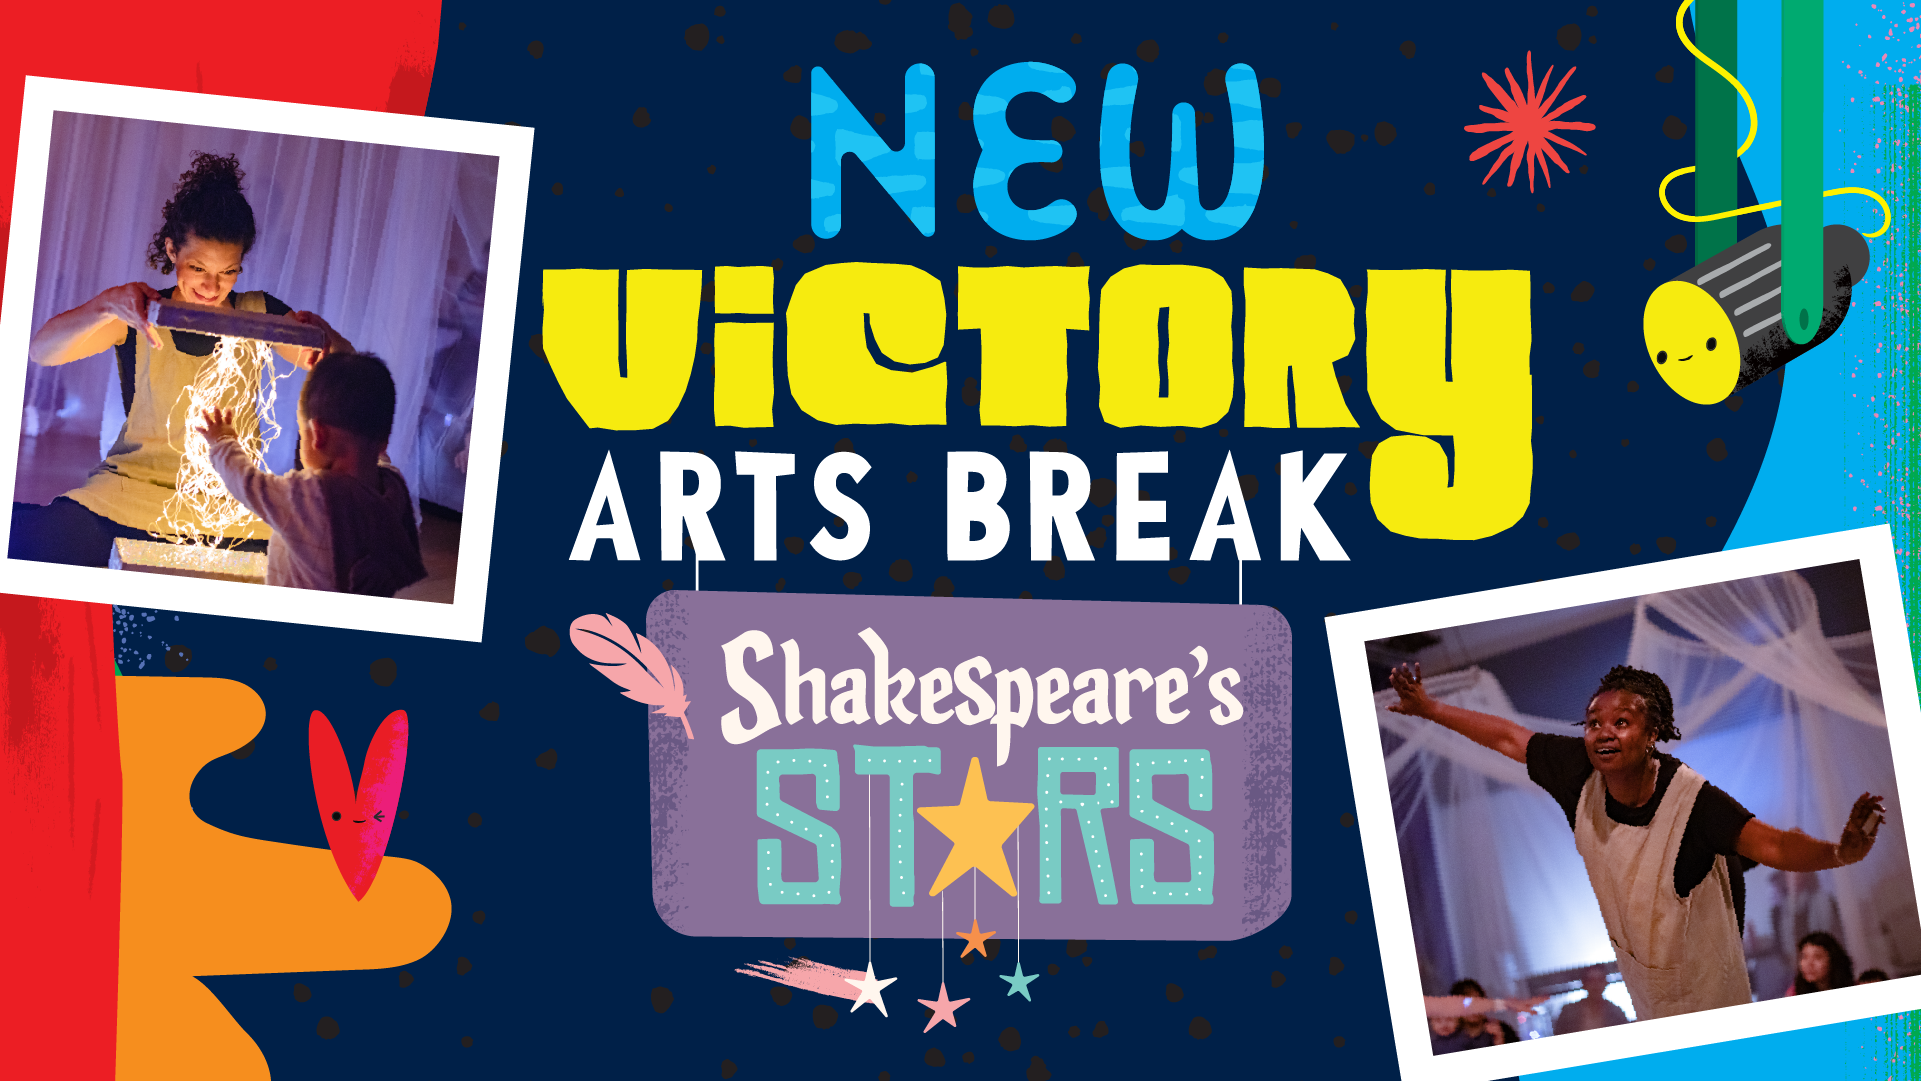 New Victory Arts Break: Shakespeare's Stars